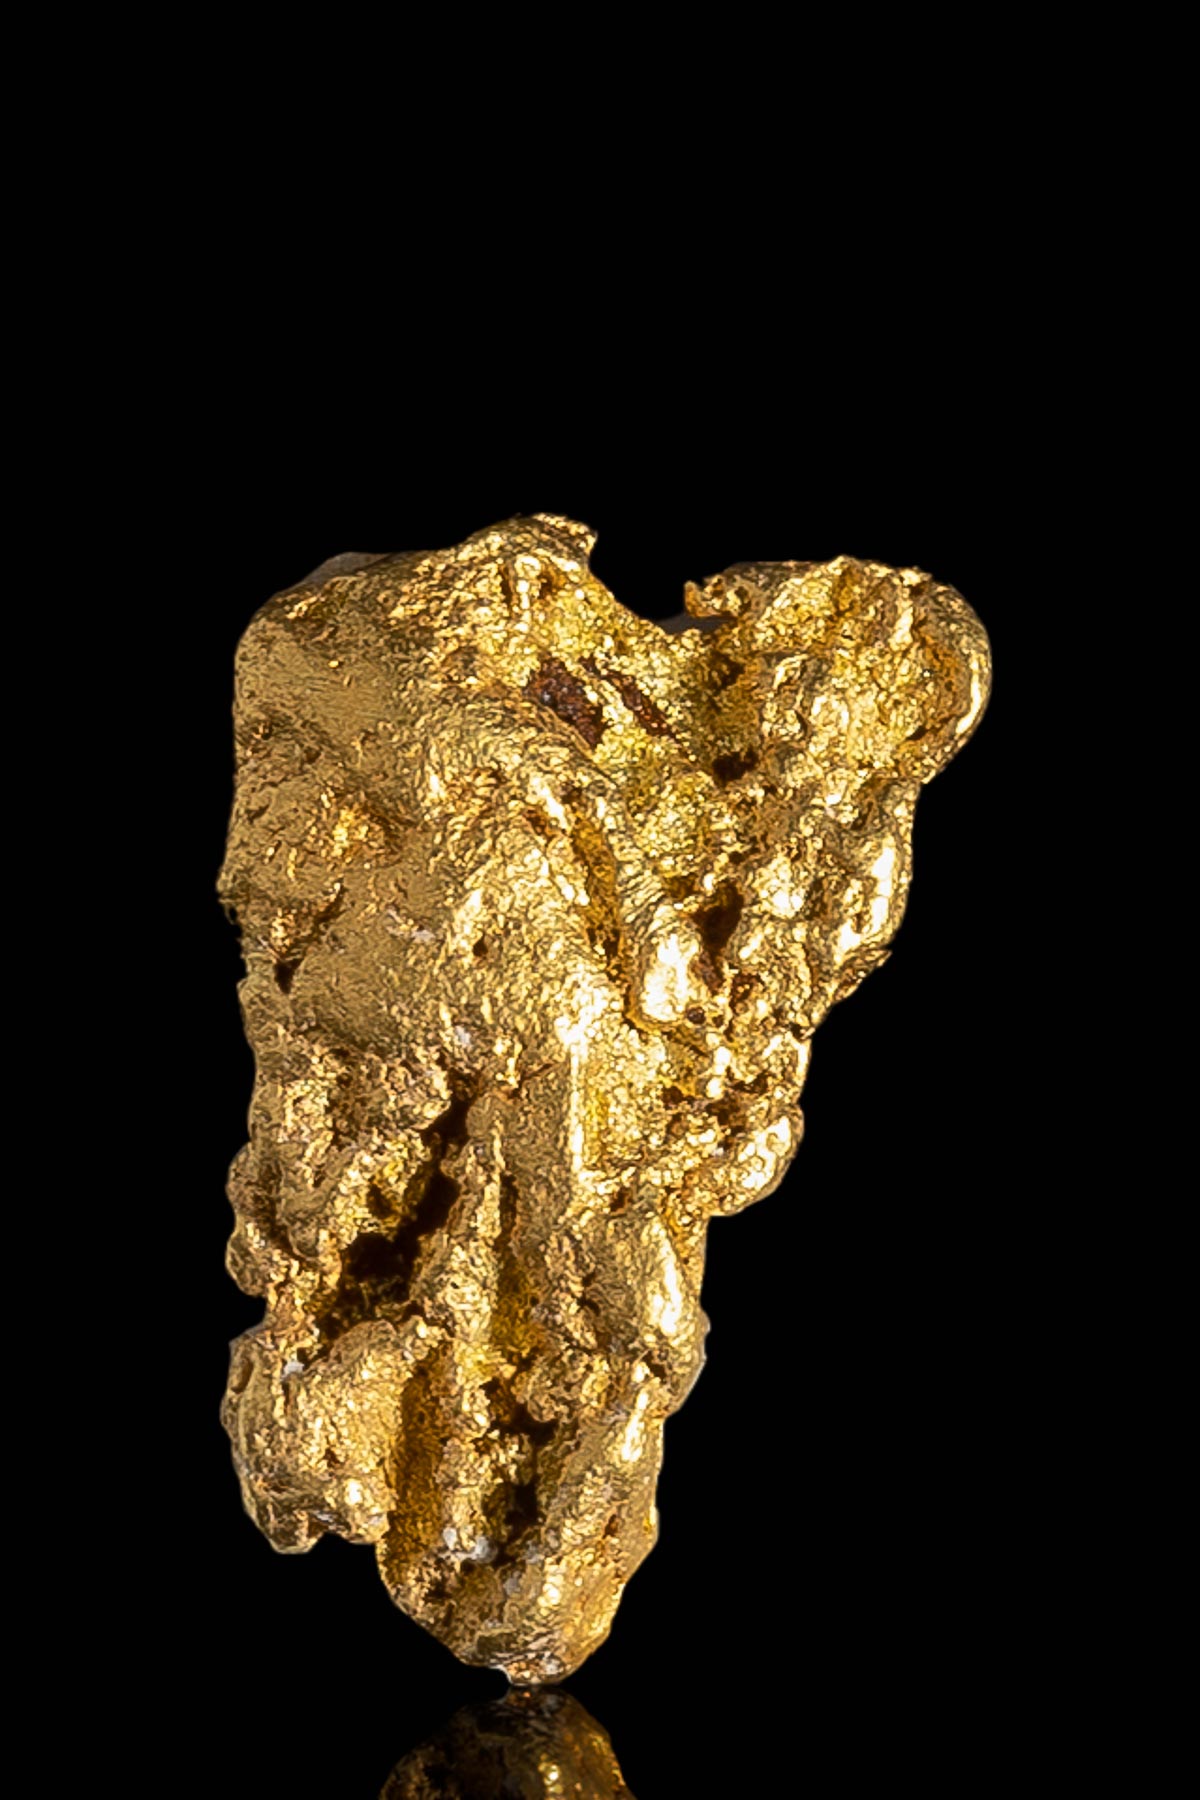 Triangle Standing Alaska Natural Gold Nugget - 2.18 grams